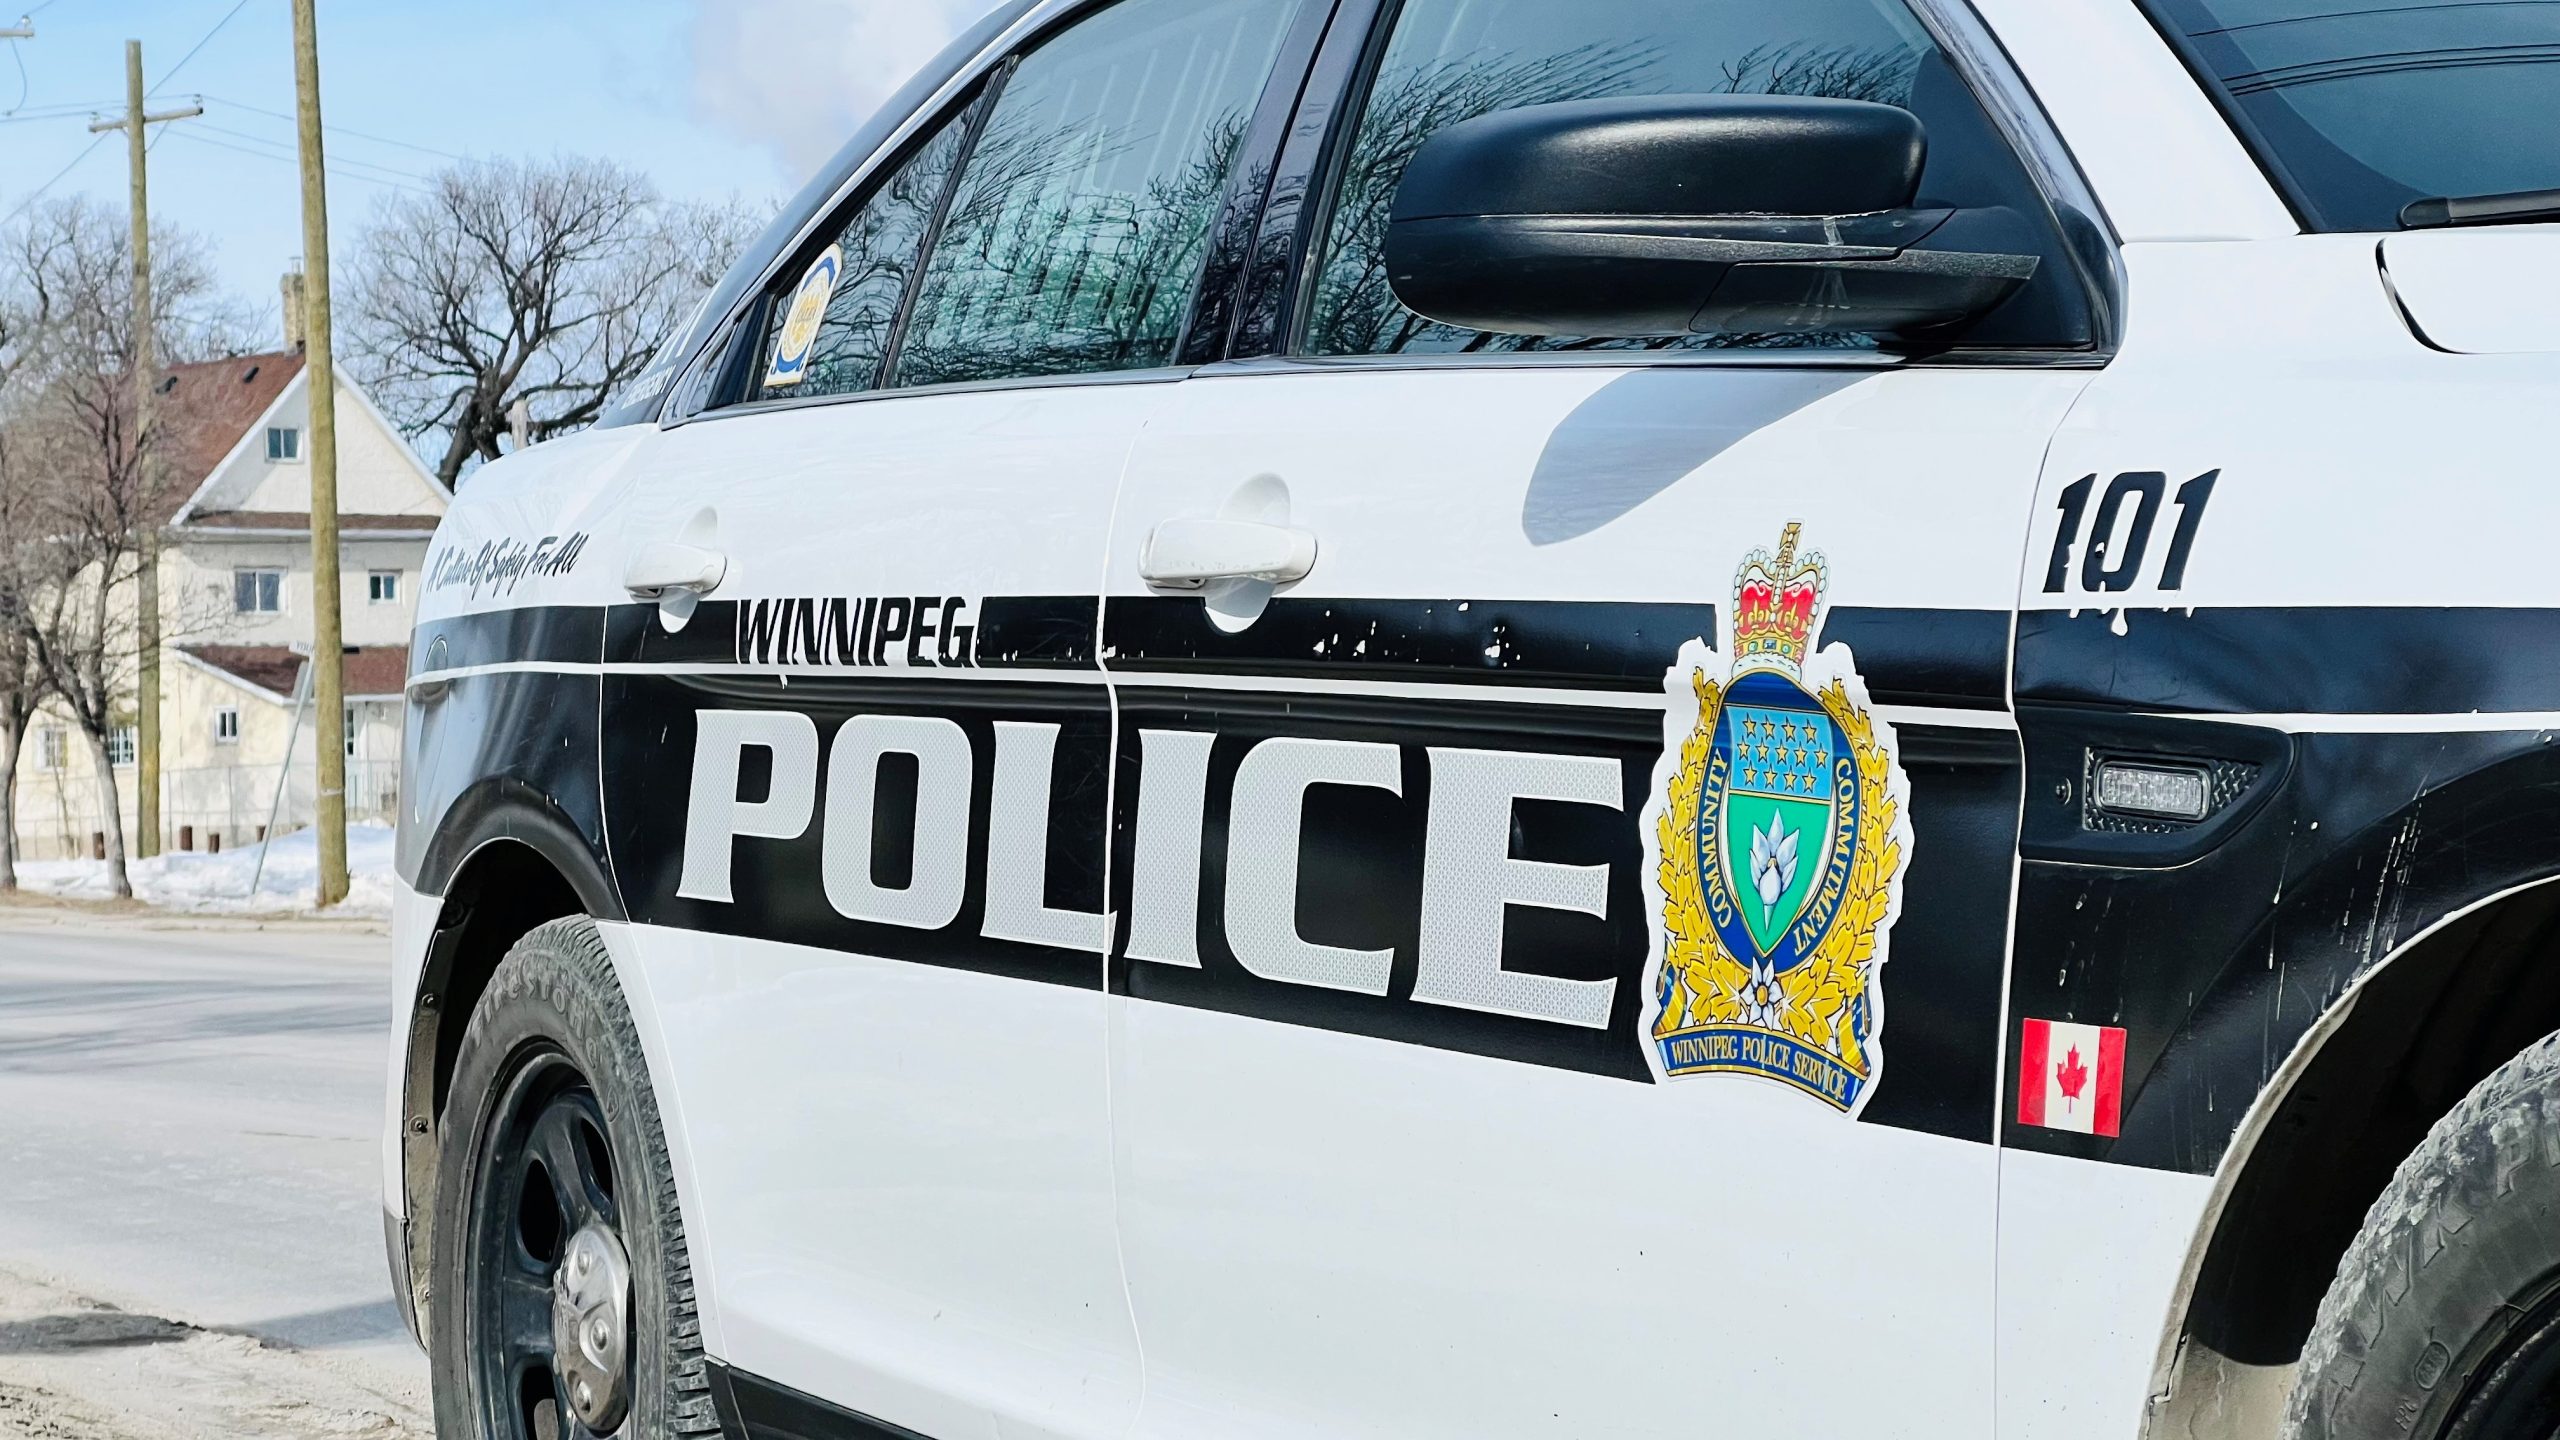 Winnipeg police Armored vehicle crashes, items stolen CityNews Winnipeg